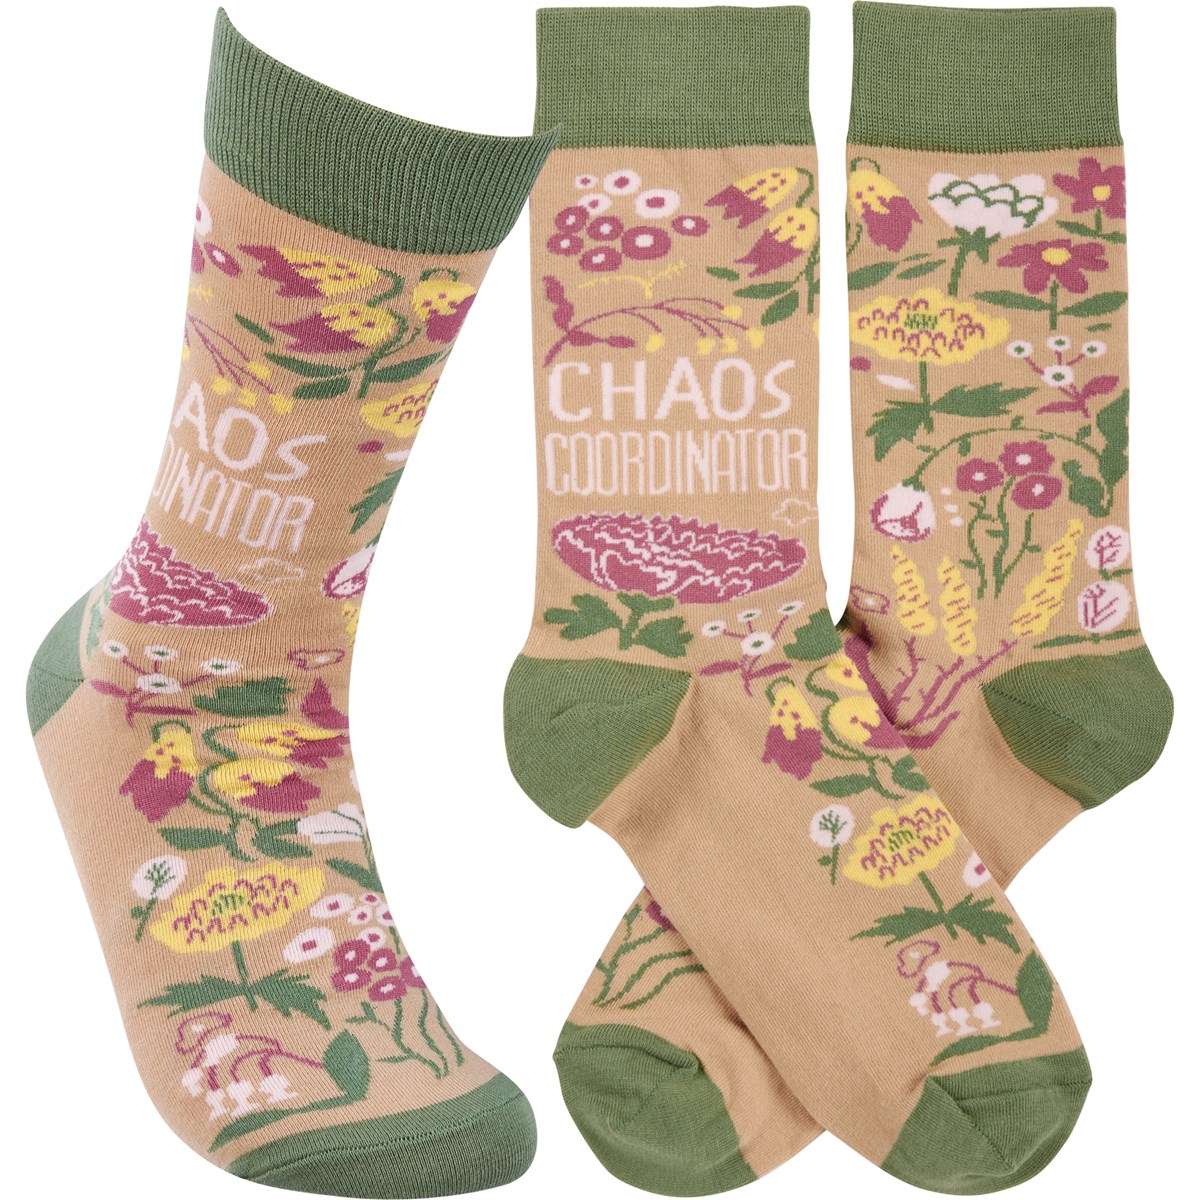 Chaos Coordinator Socks - Cotton, Nylon, Spandex